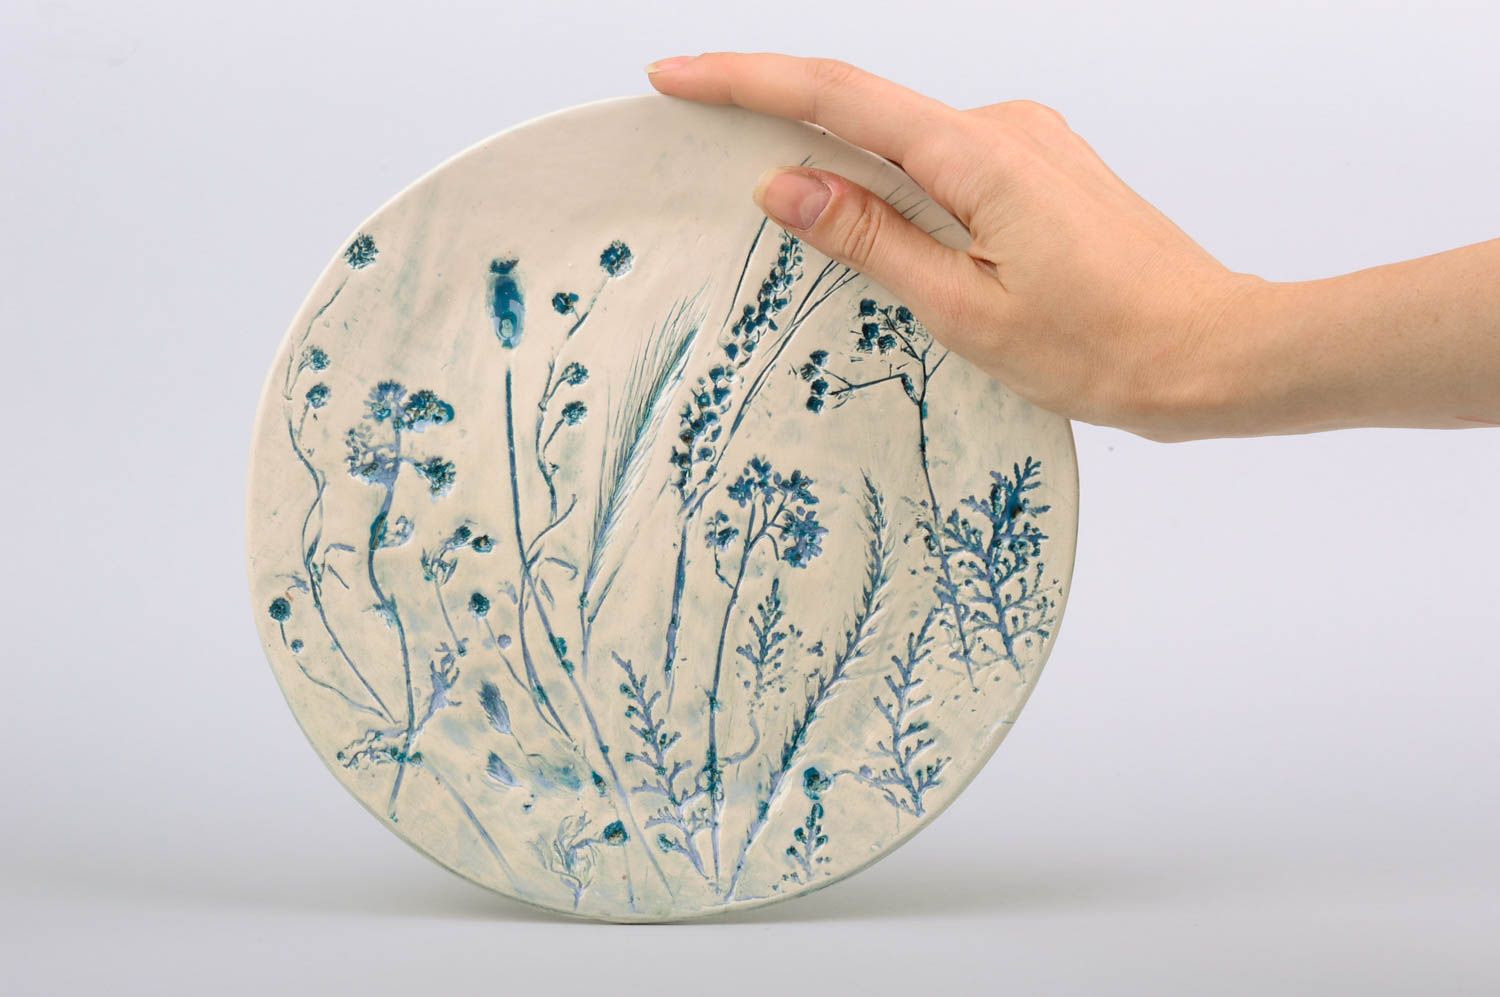 Handmade painted ceramic plate decorative tableware designer dishware ideas photo 2